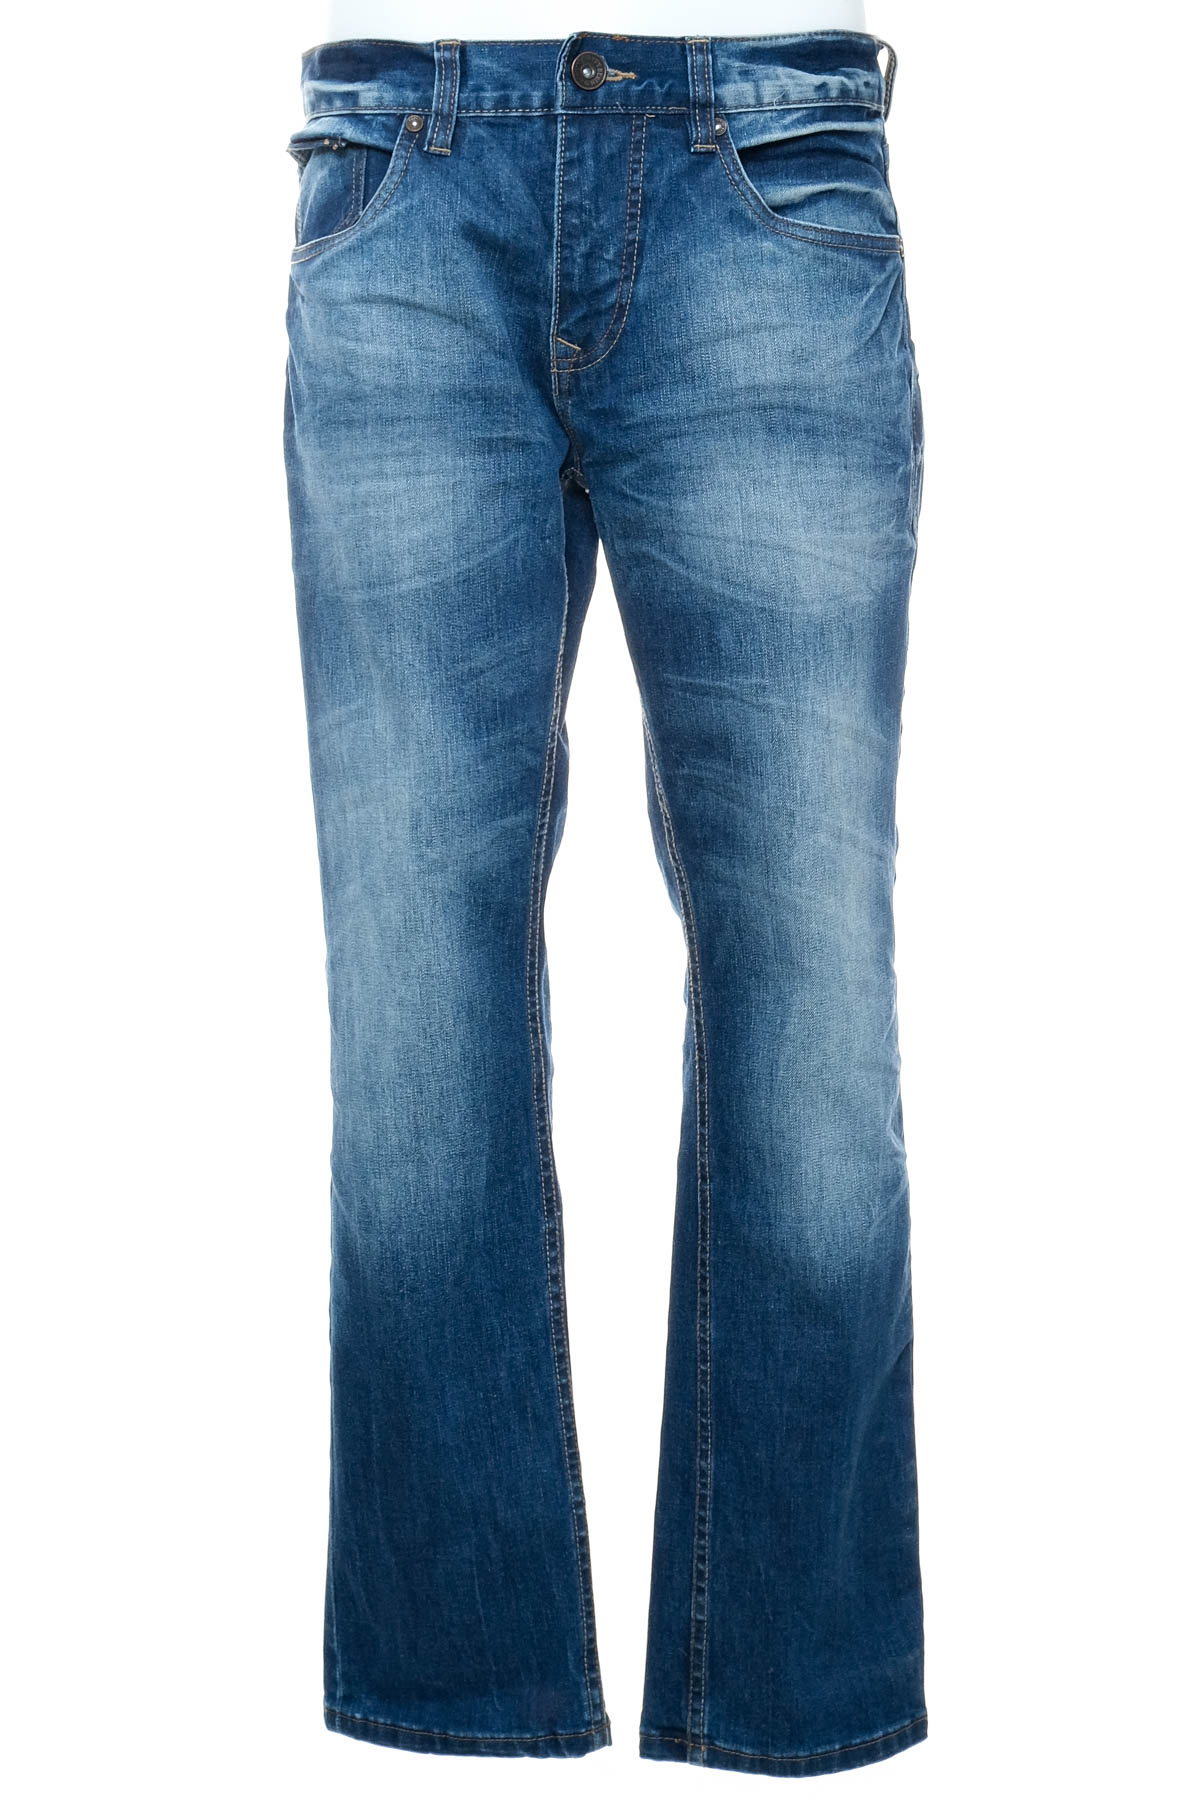 Jeans pentru bărbăți - SAVVY Denim - 0